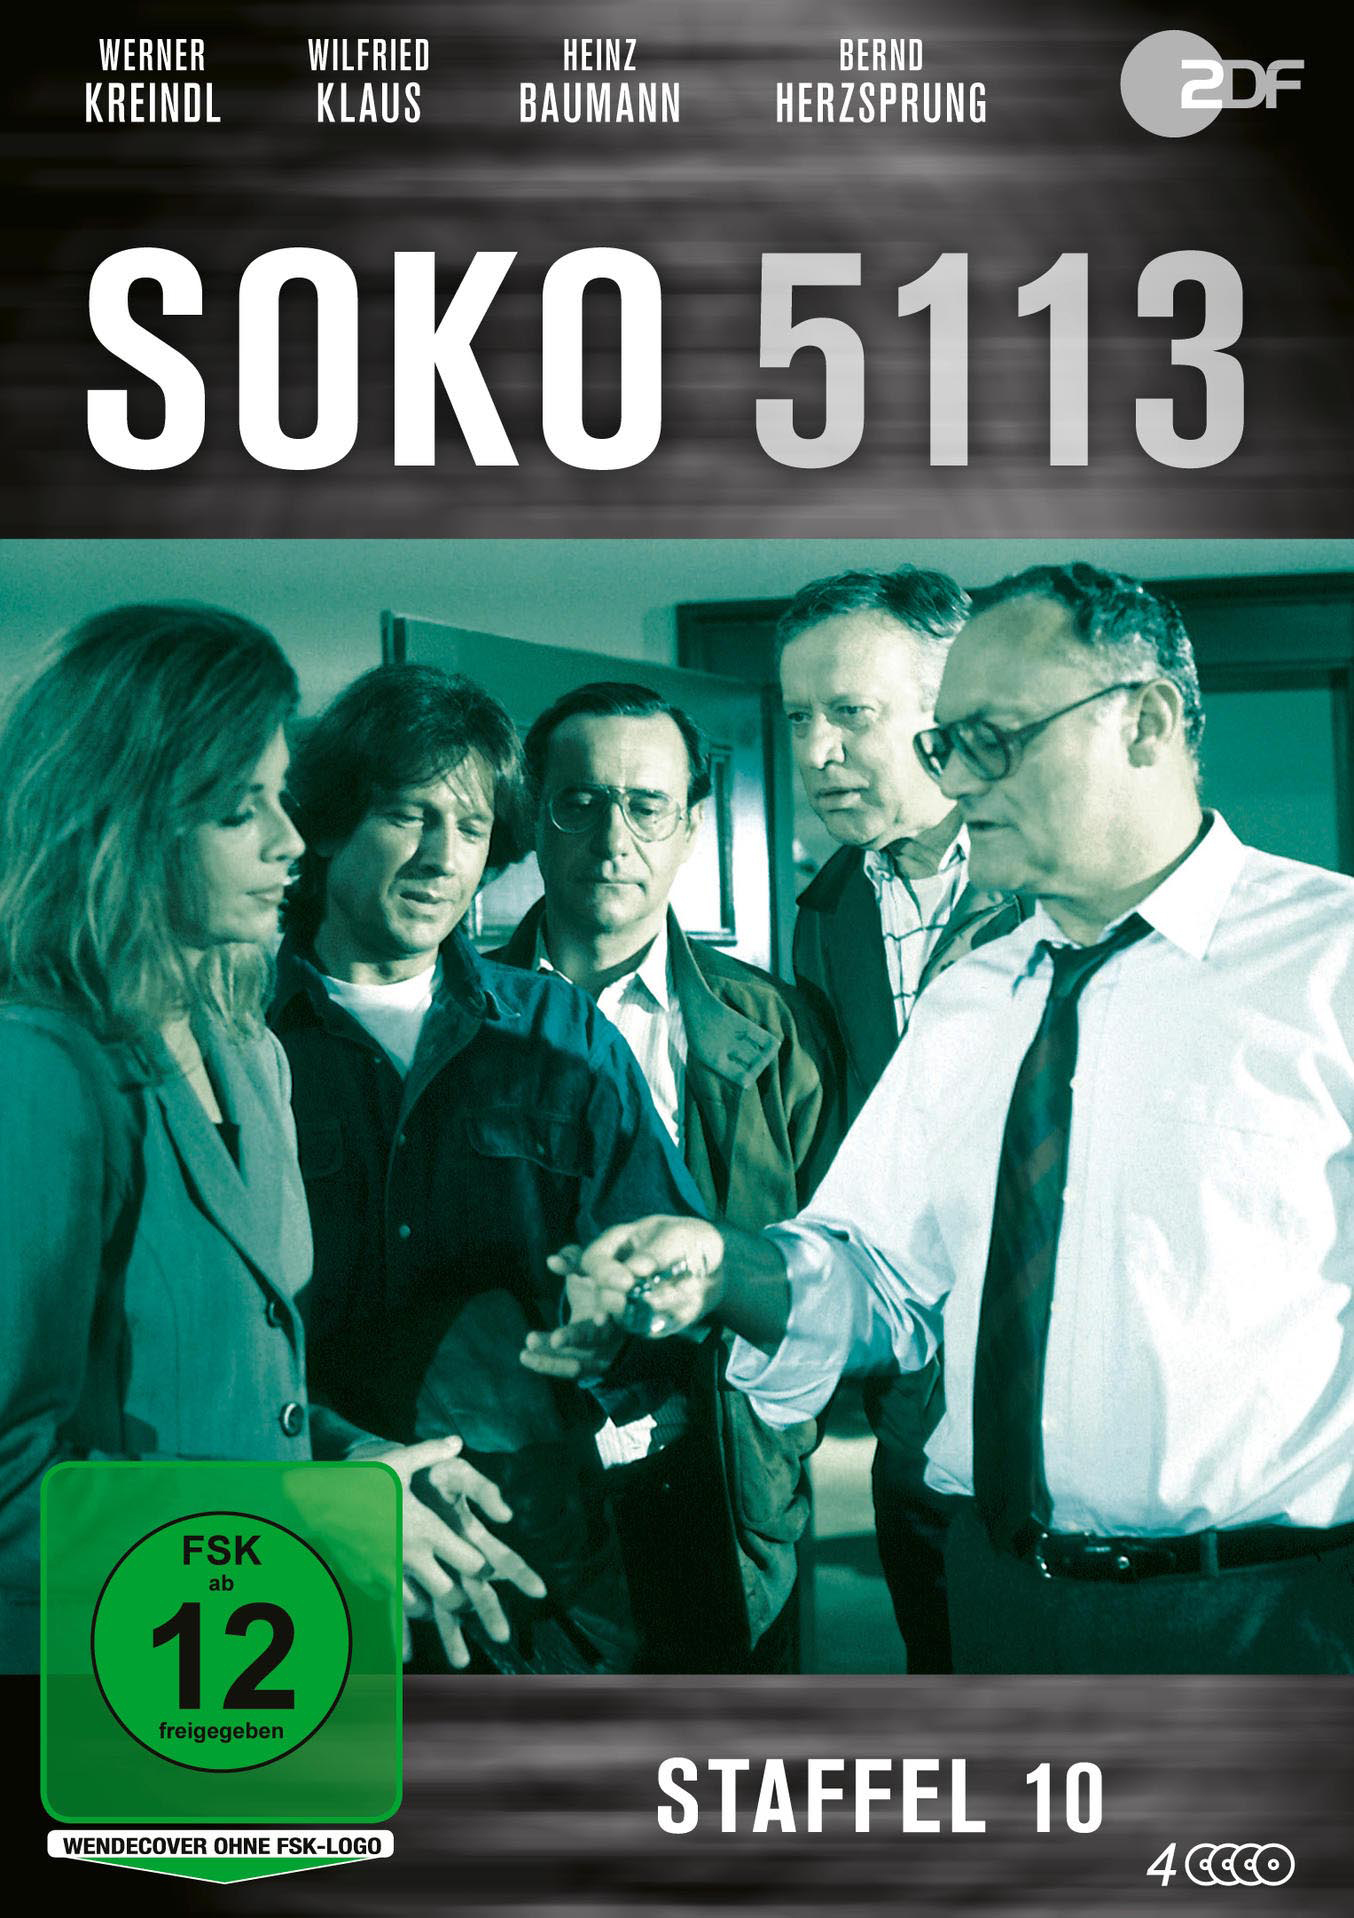 Soko 5113 - Staffel DVD 10